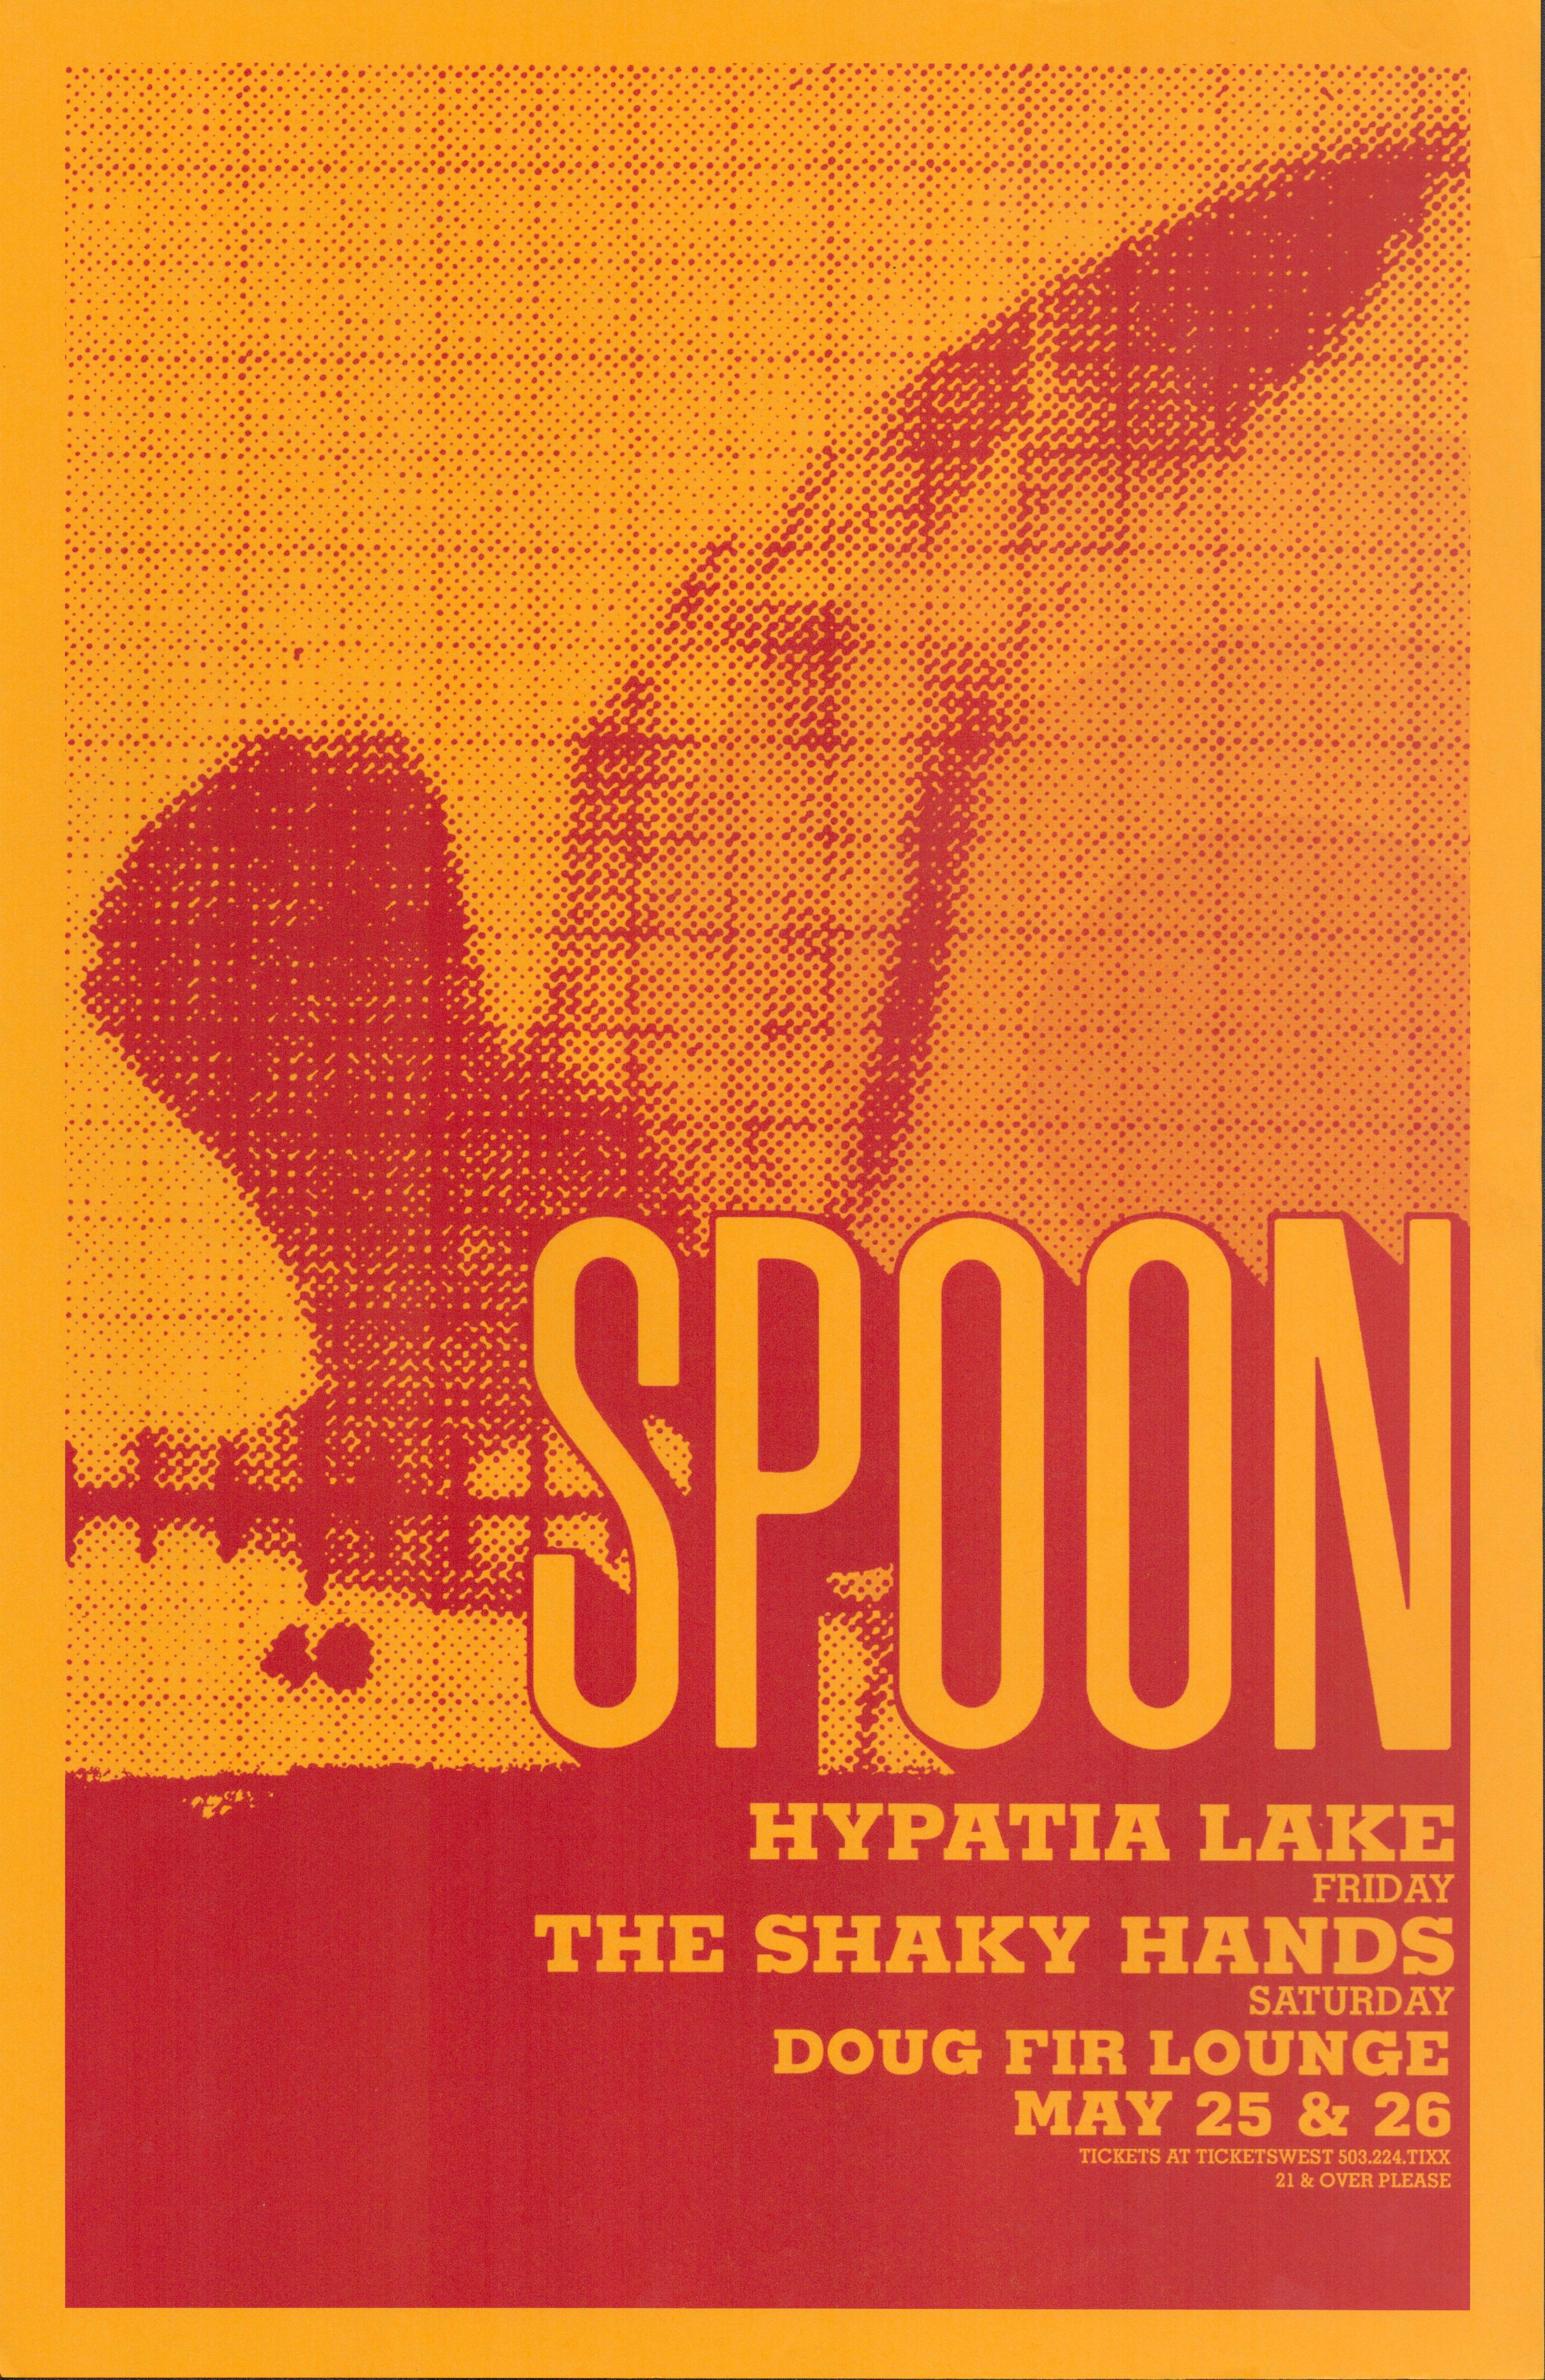 MXP-143.6 Spoon Doug Fir 2007 Concert Poster